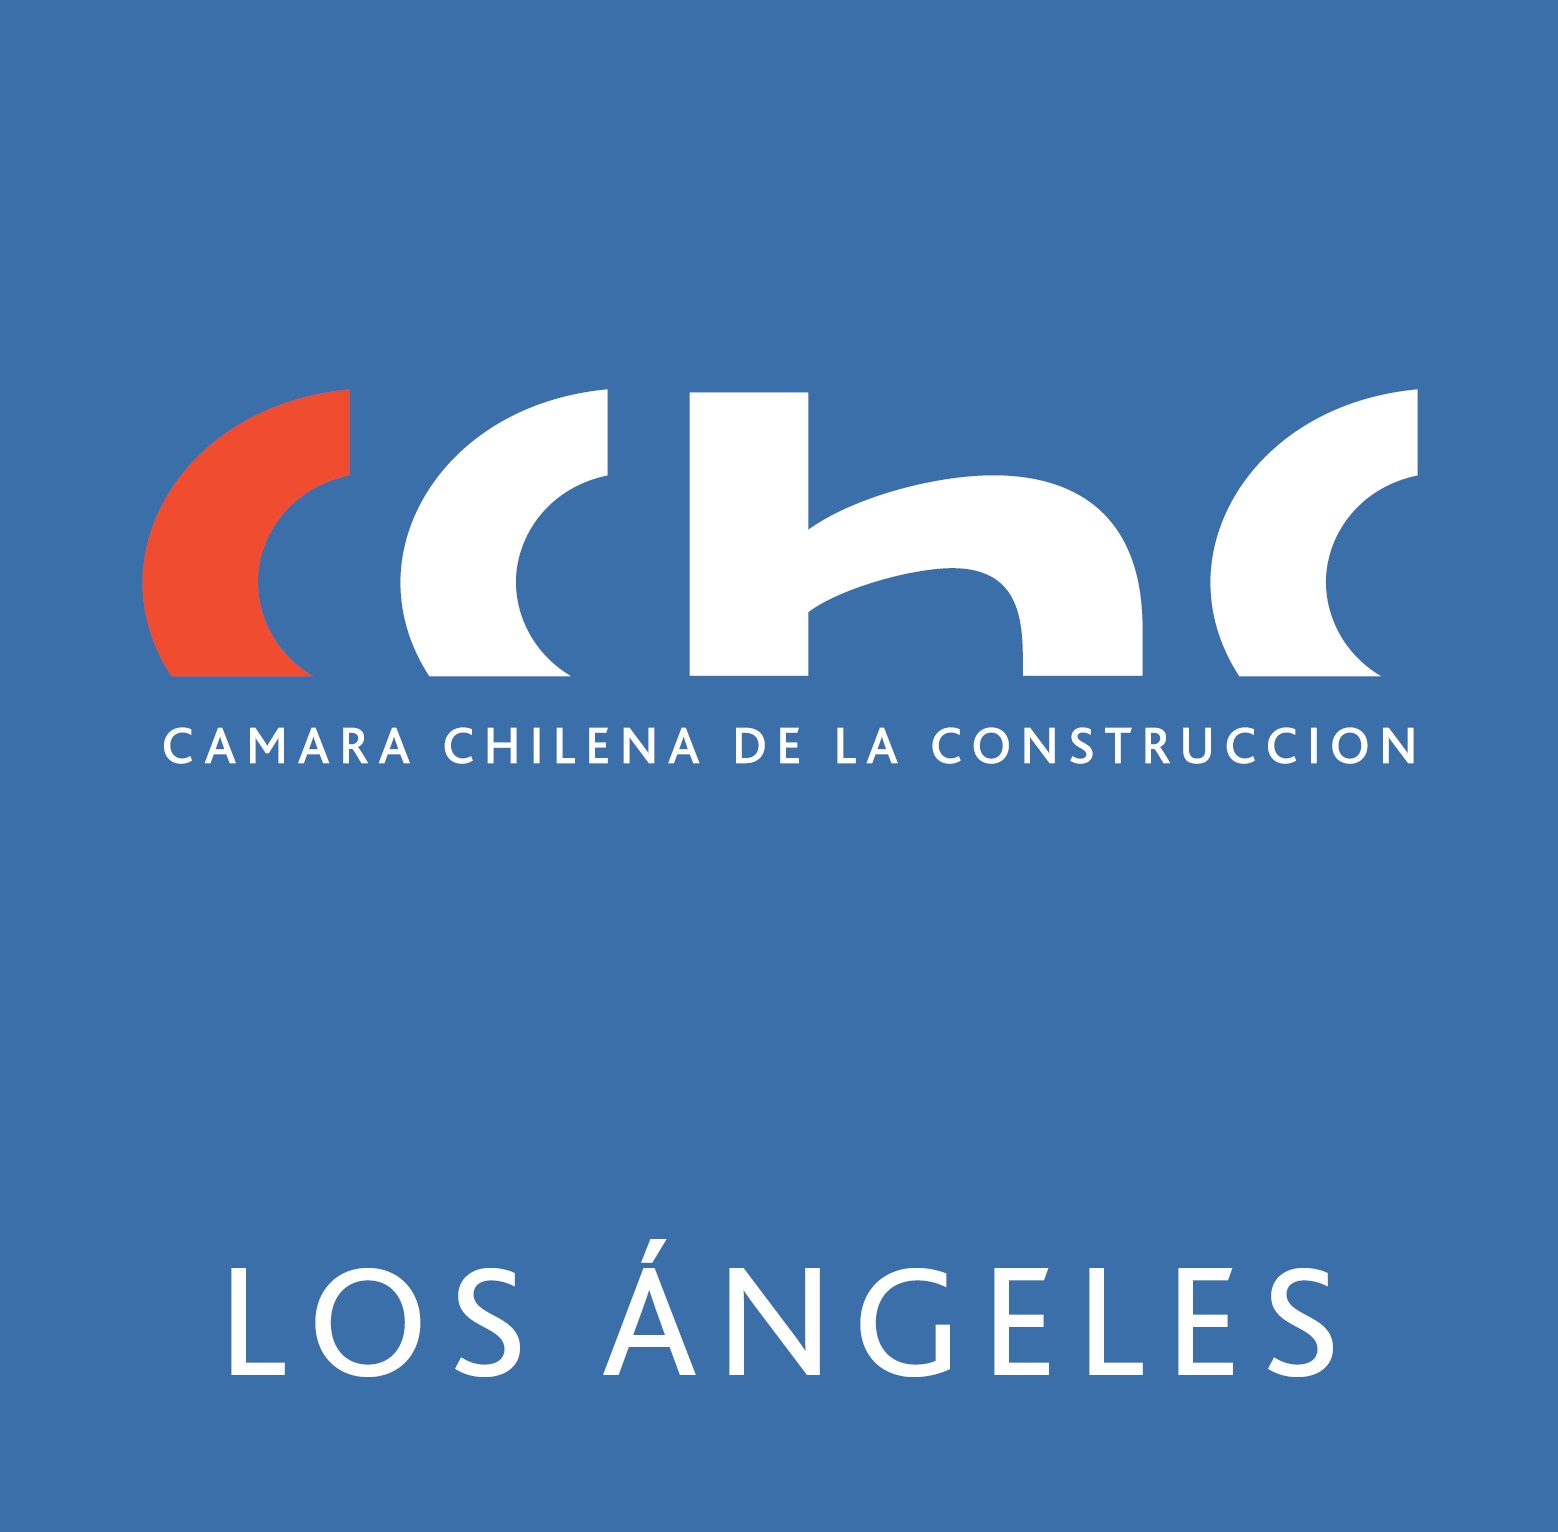 CChC_Los_Angeles.jpg